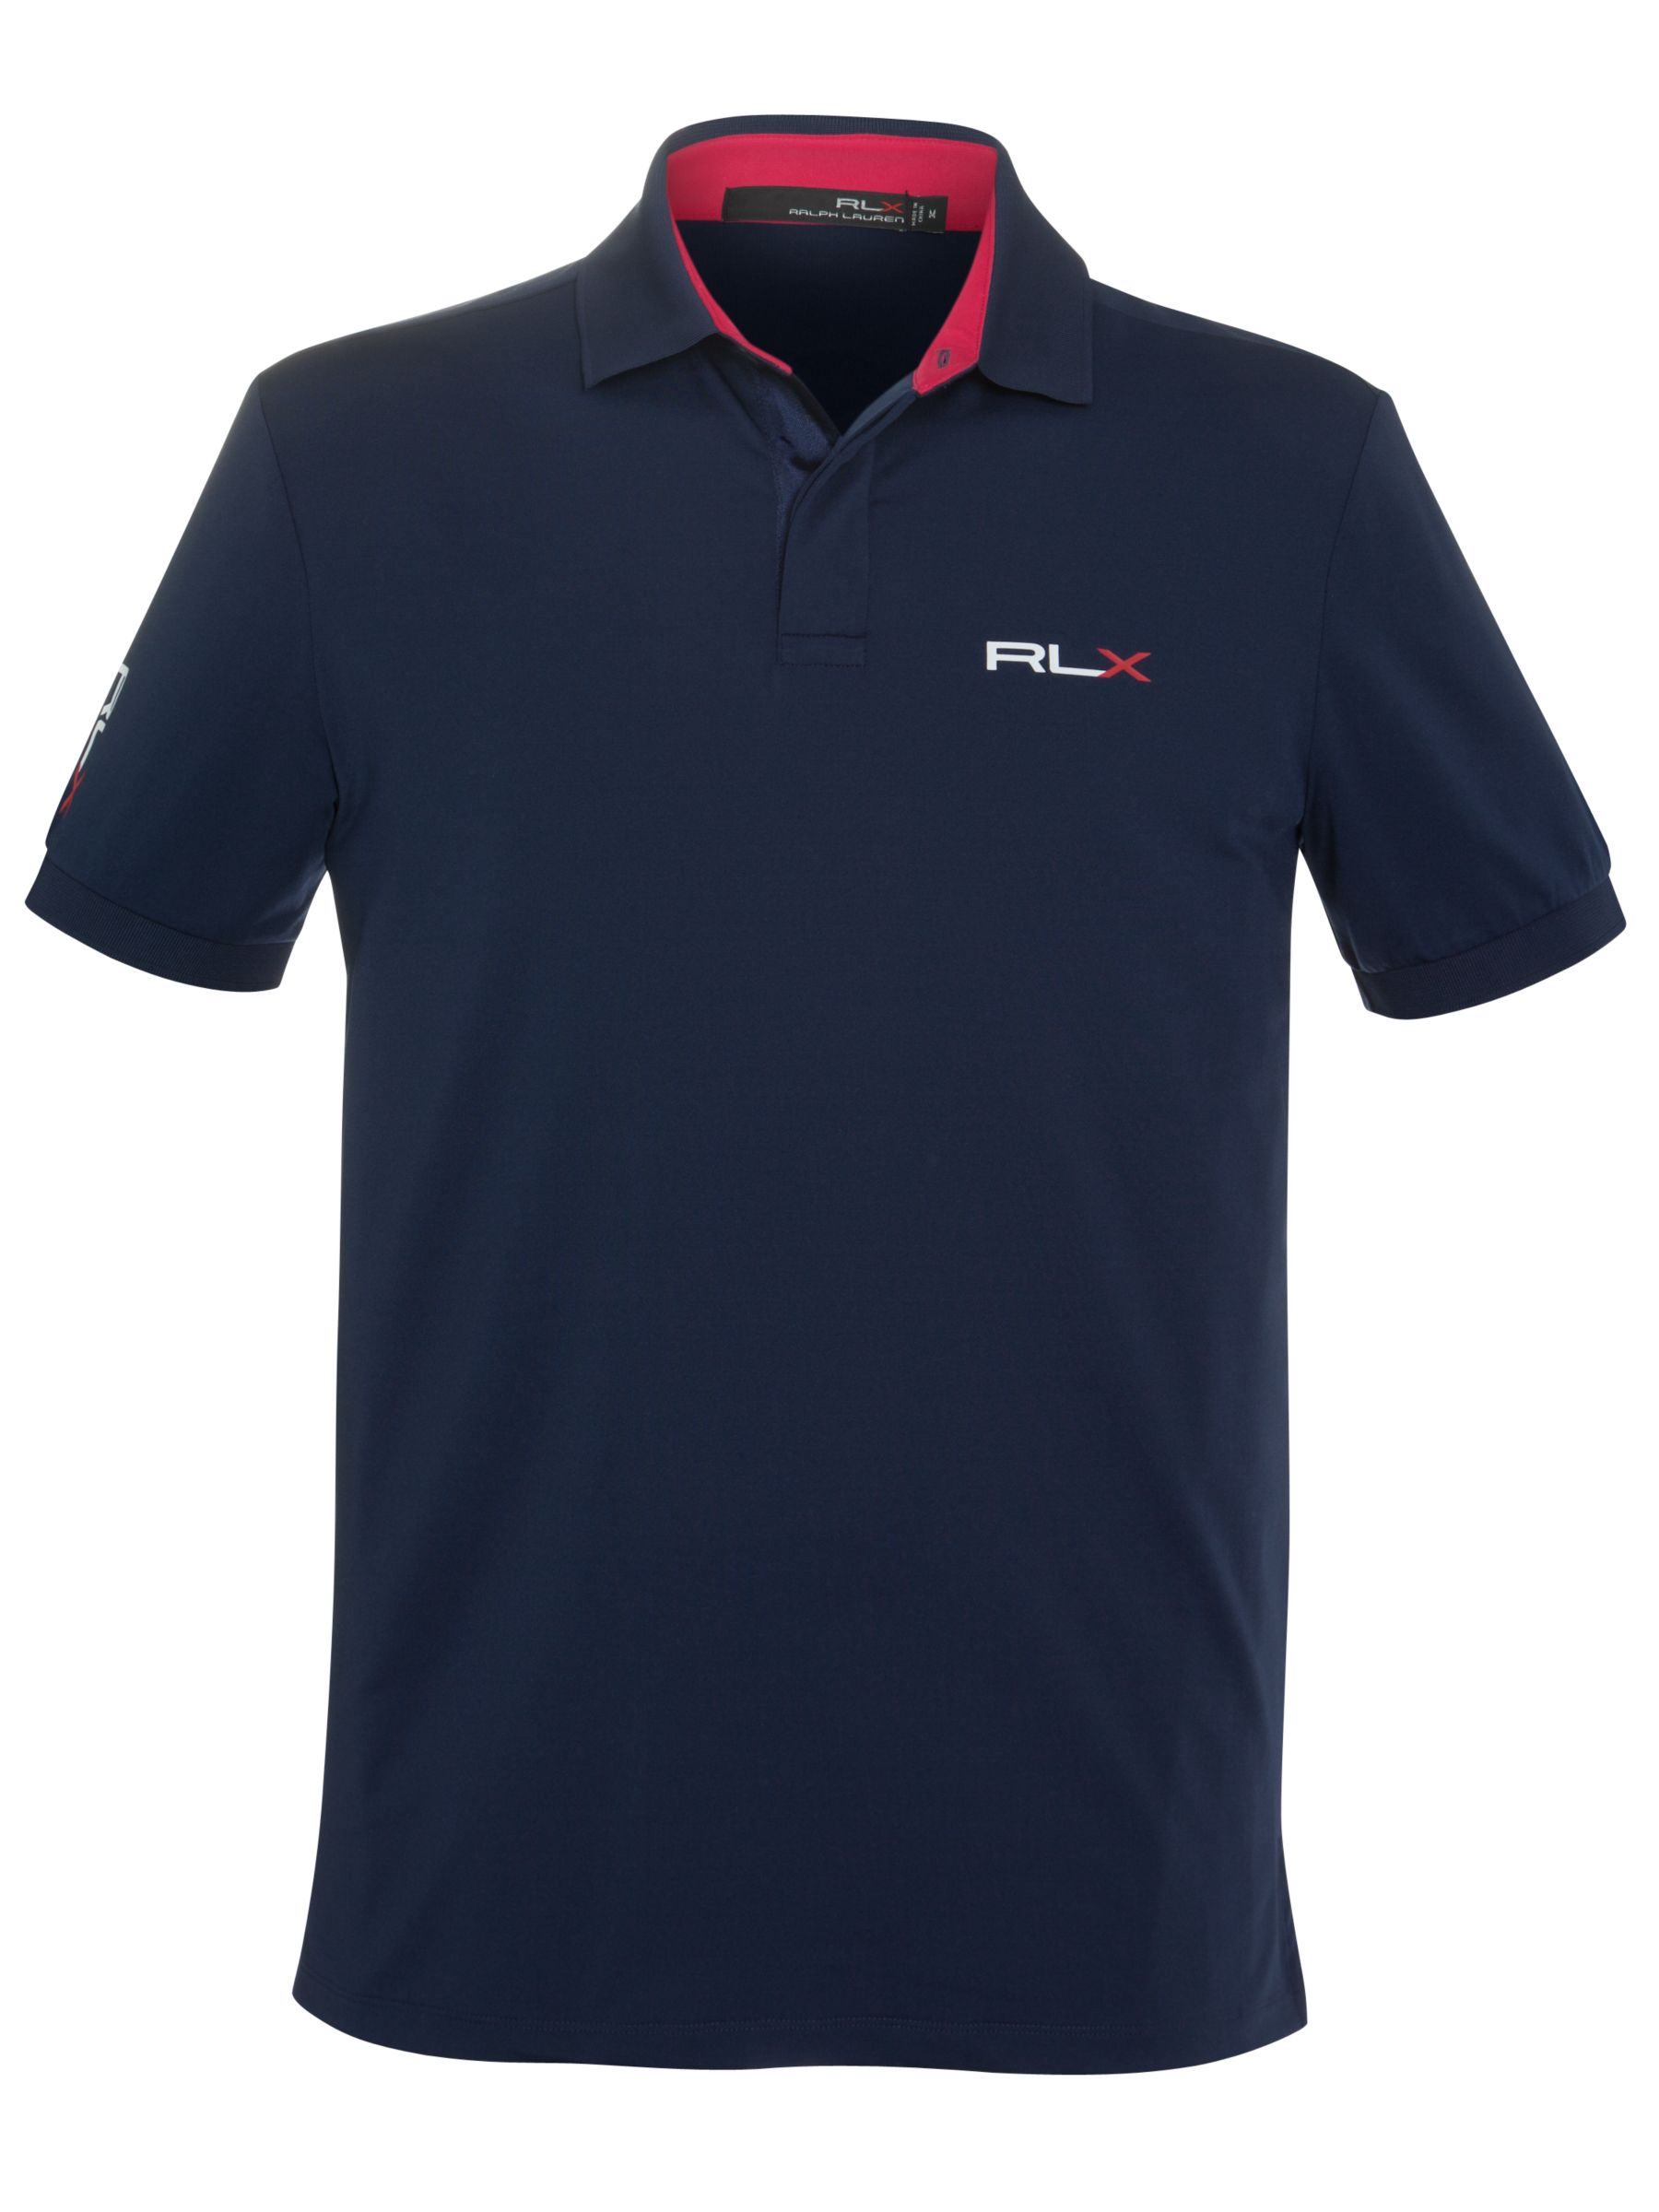 Ralph Lauren RLX Golf Solid Tour Fit Polo Shirt at John Lewis & Partners